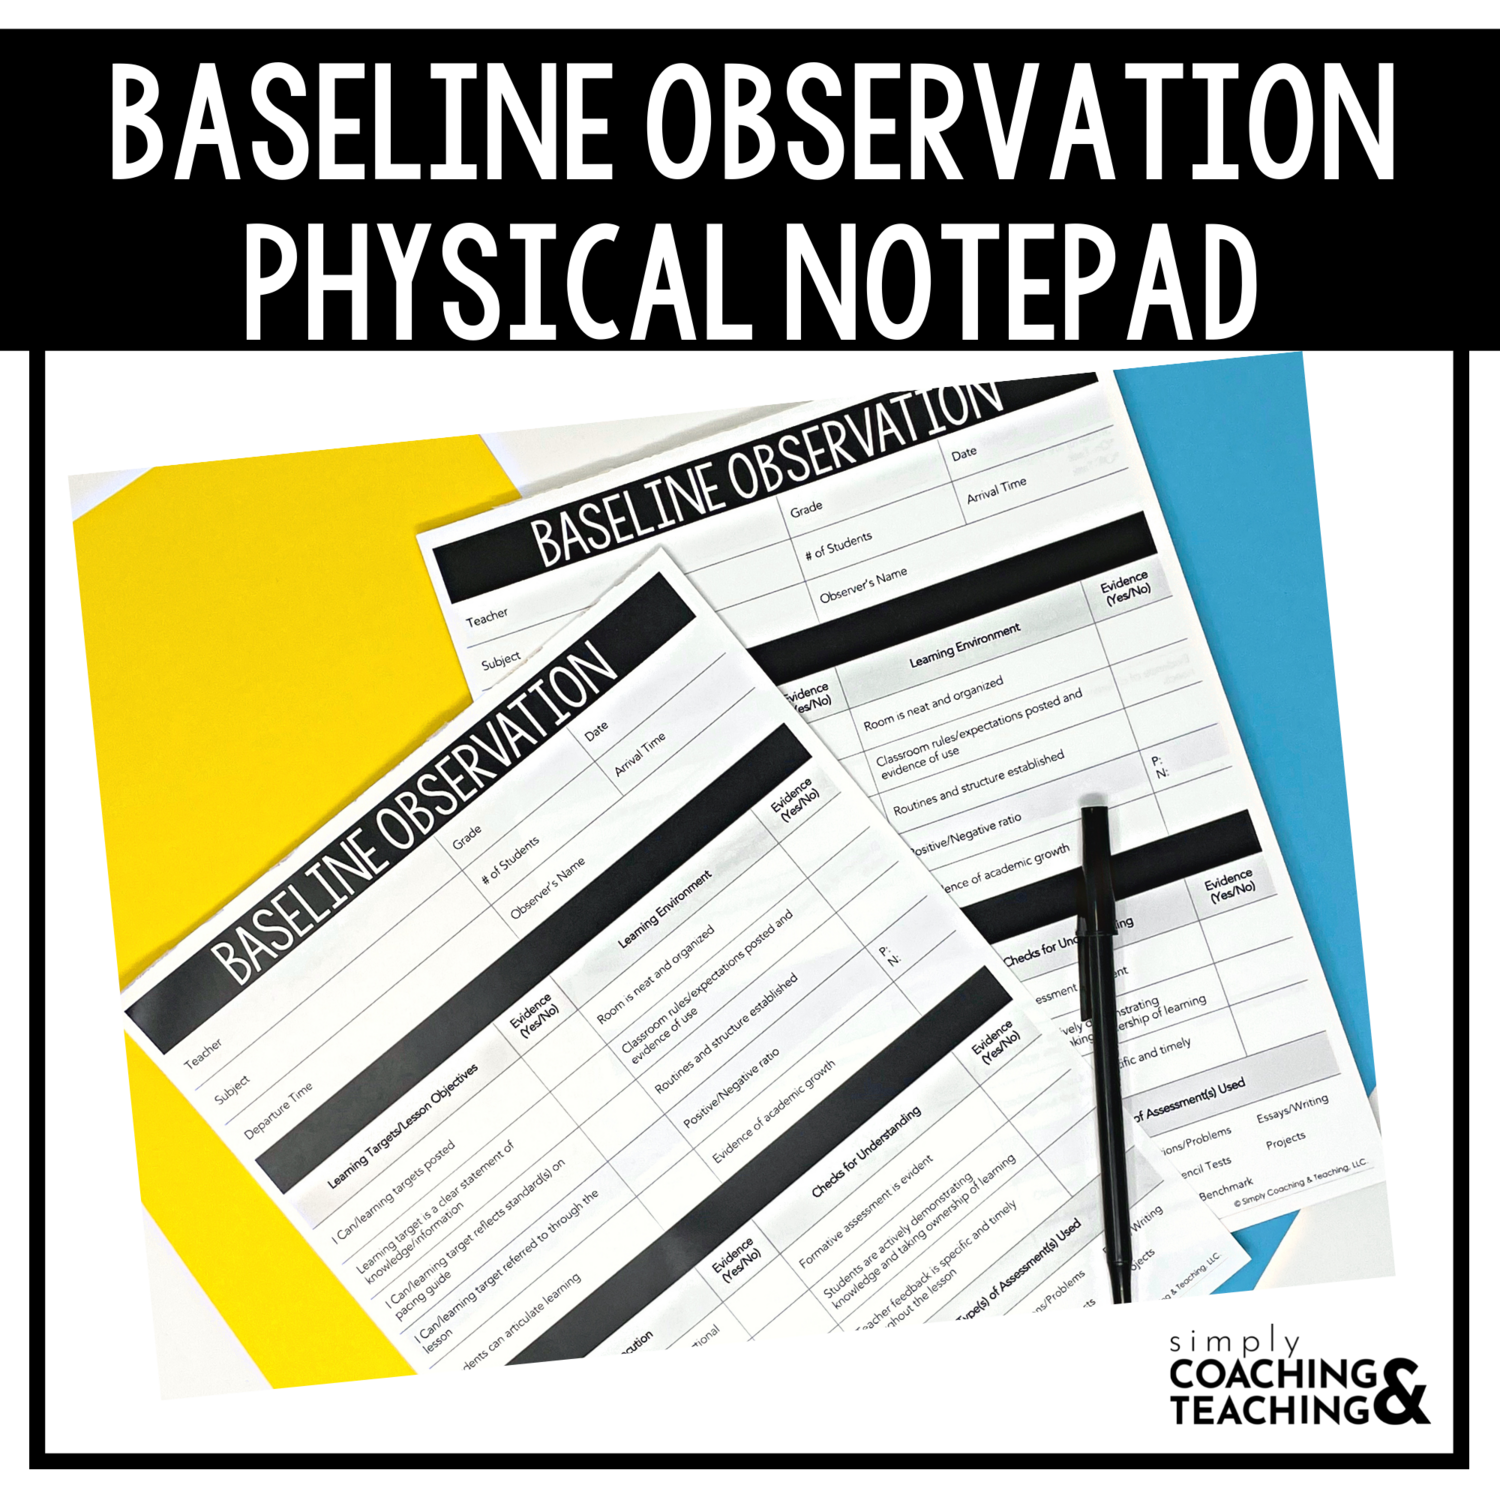 PHYSICAL NOTEPAD - Baseline Observation Form